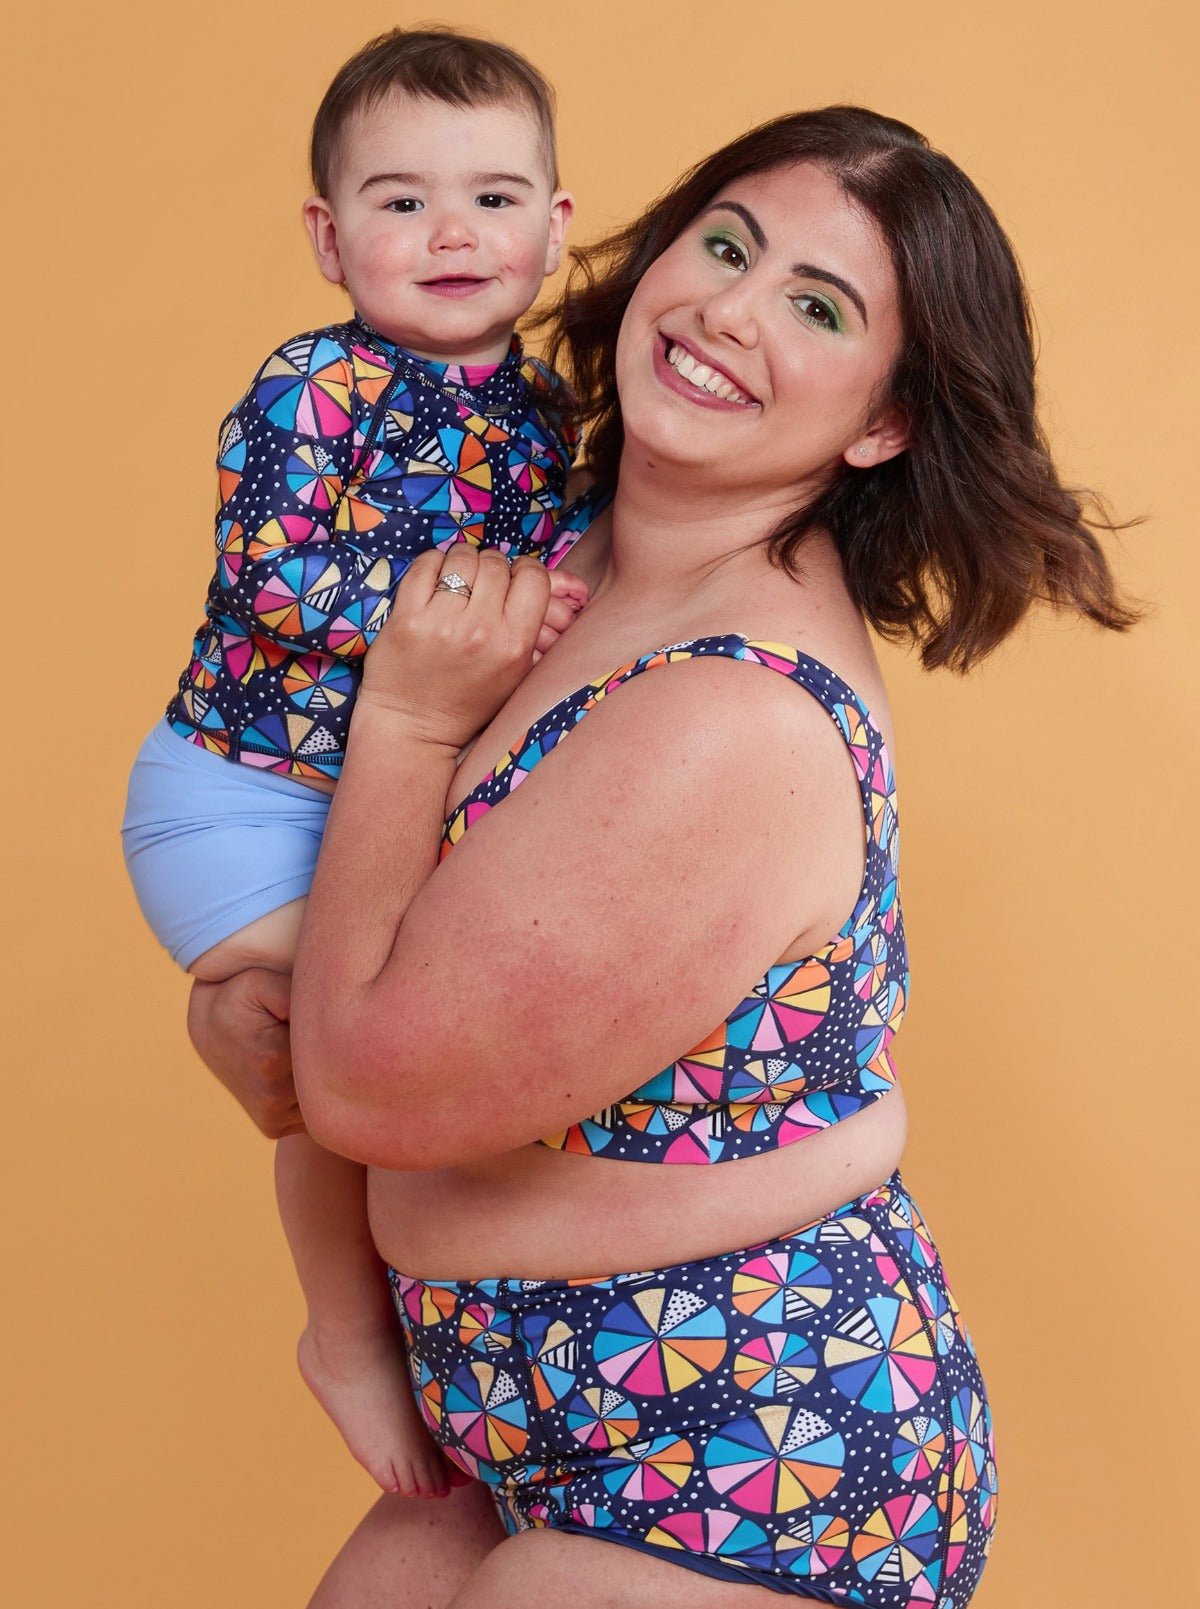 Colour Wheel Kids Long-Sleeved Rashie Top - matching mum and son swimwear